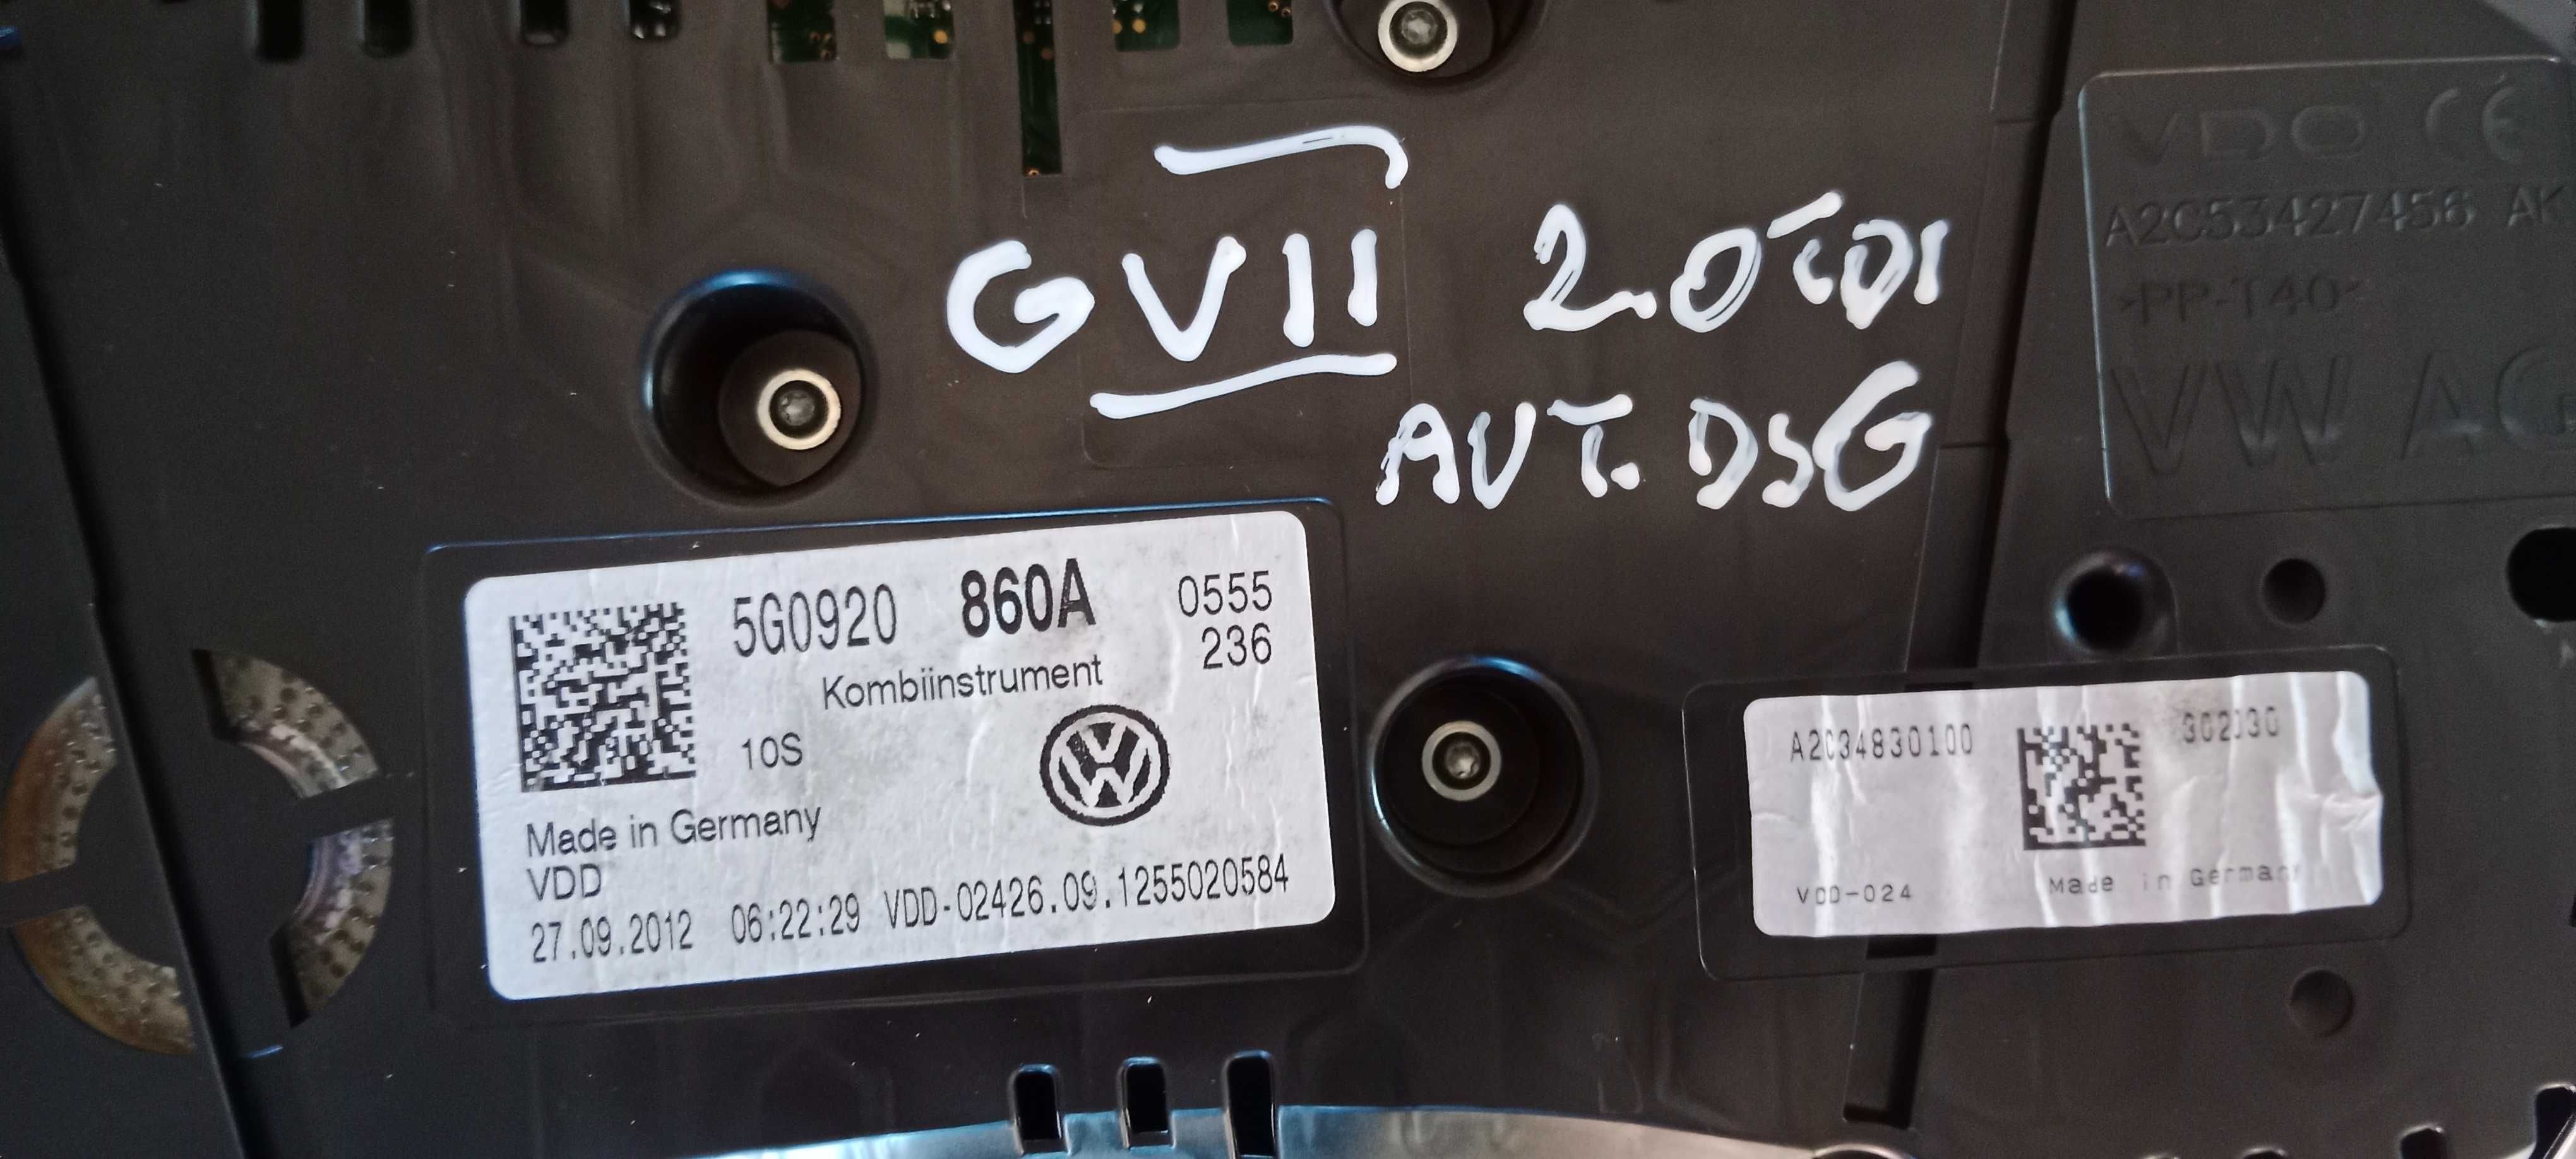 Licznik Zegary VW Golf VII 2.0 TDI DSG 5G0.920.860A